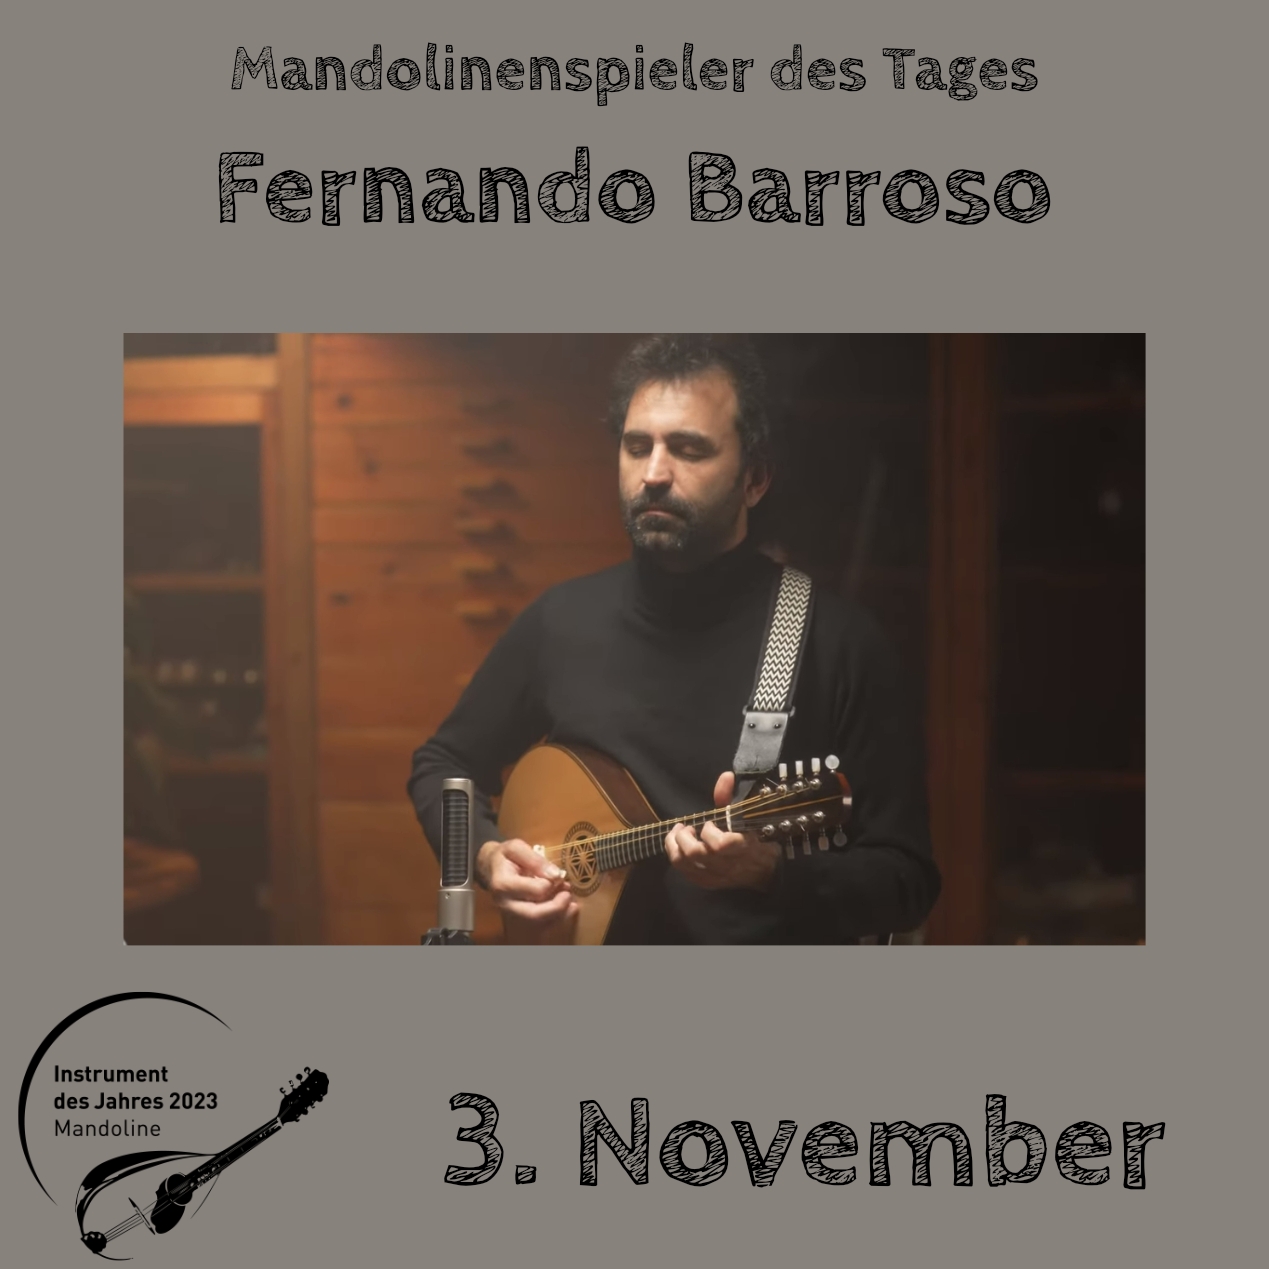 3. November - Fernando Barroso Instrument des Jahres 2023 Mandolinenspieler Mandolinenspielerin des Tages